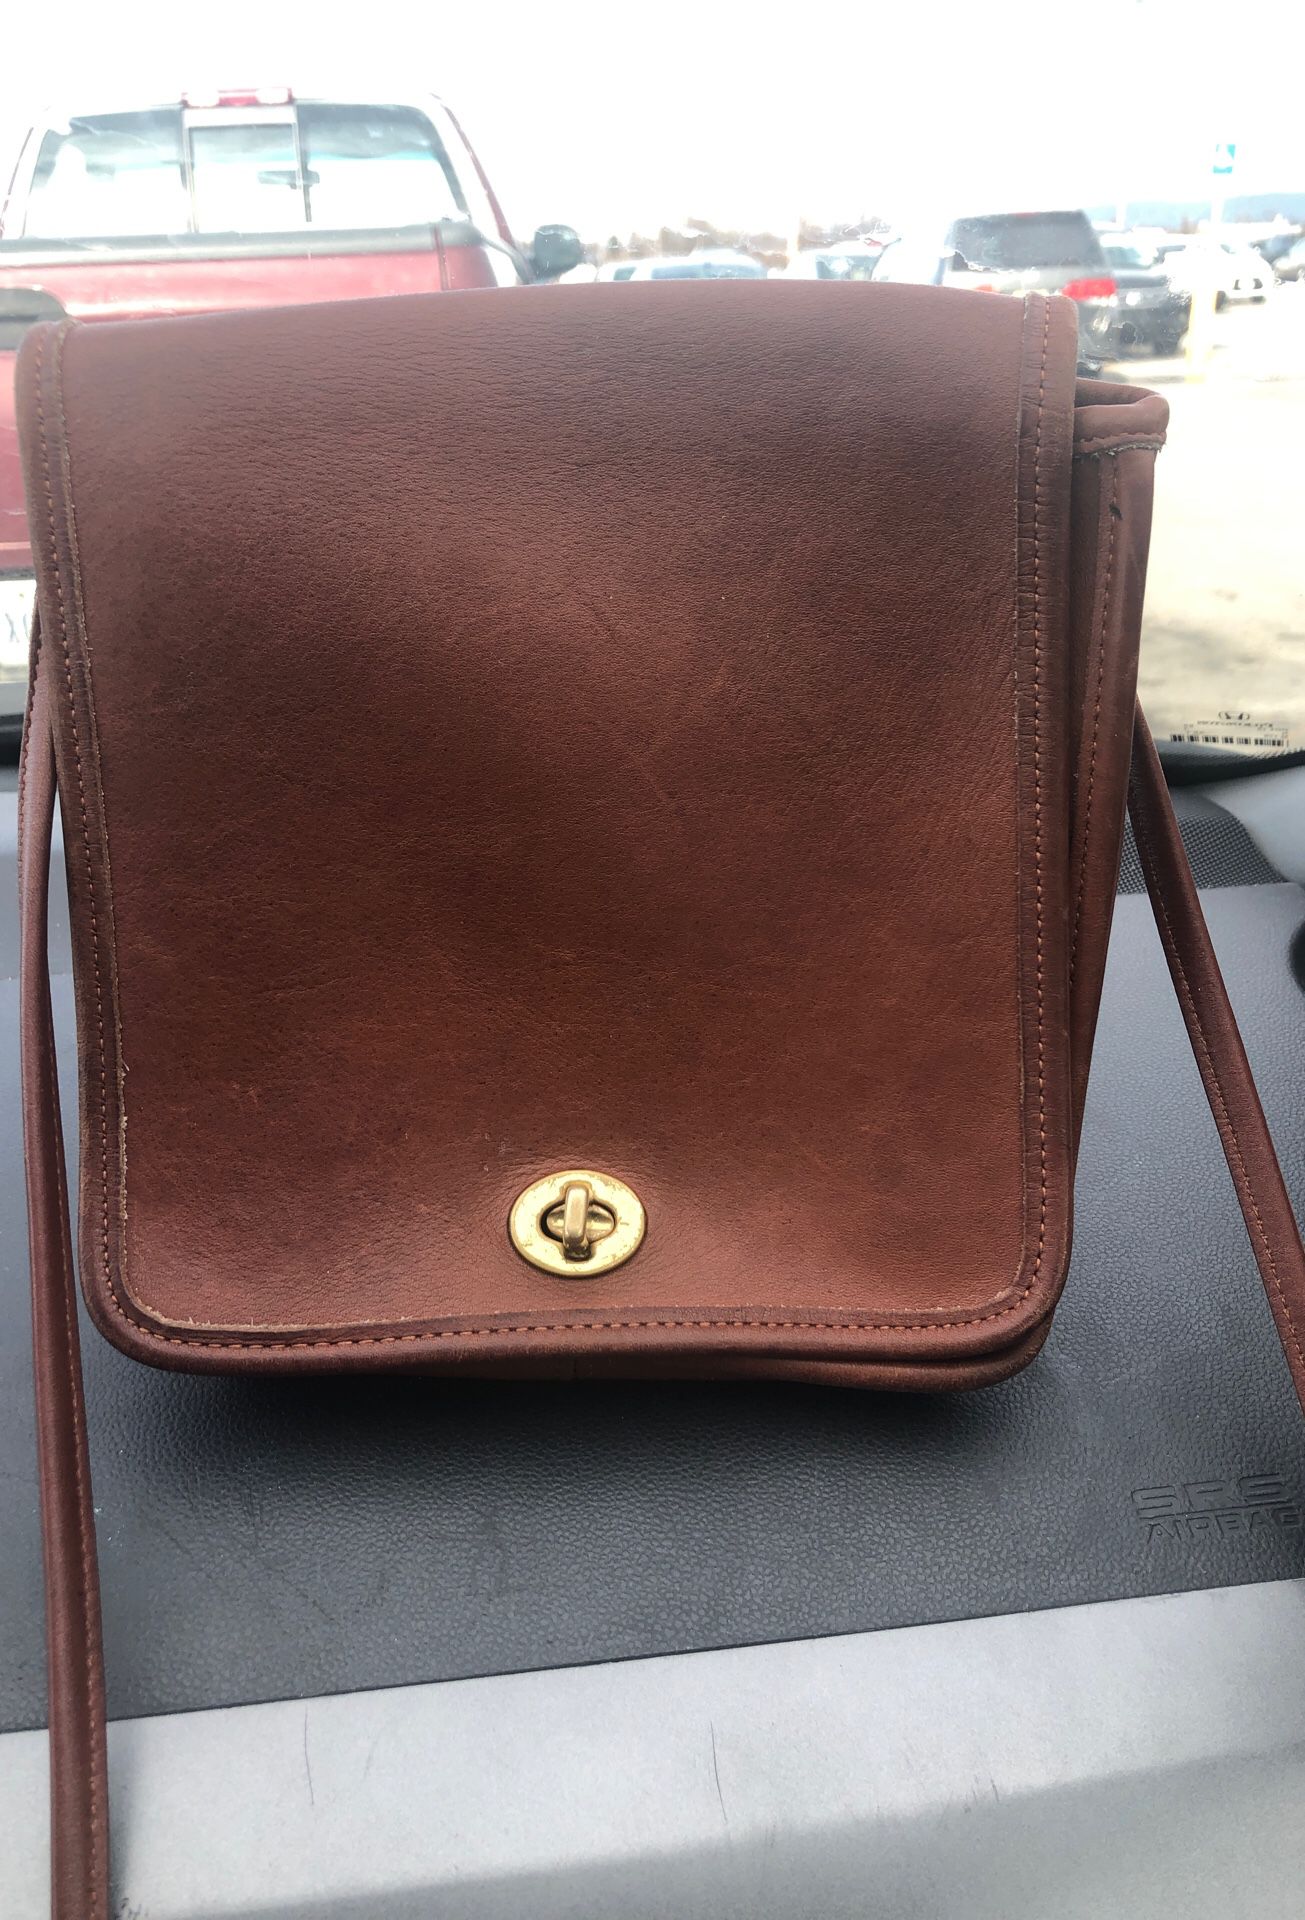 Coach cross body purse vintage